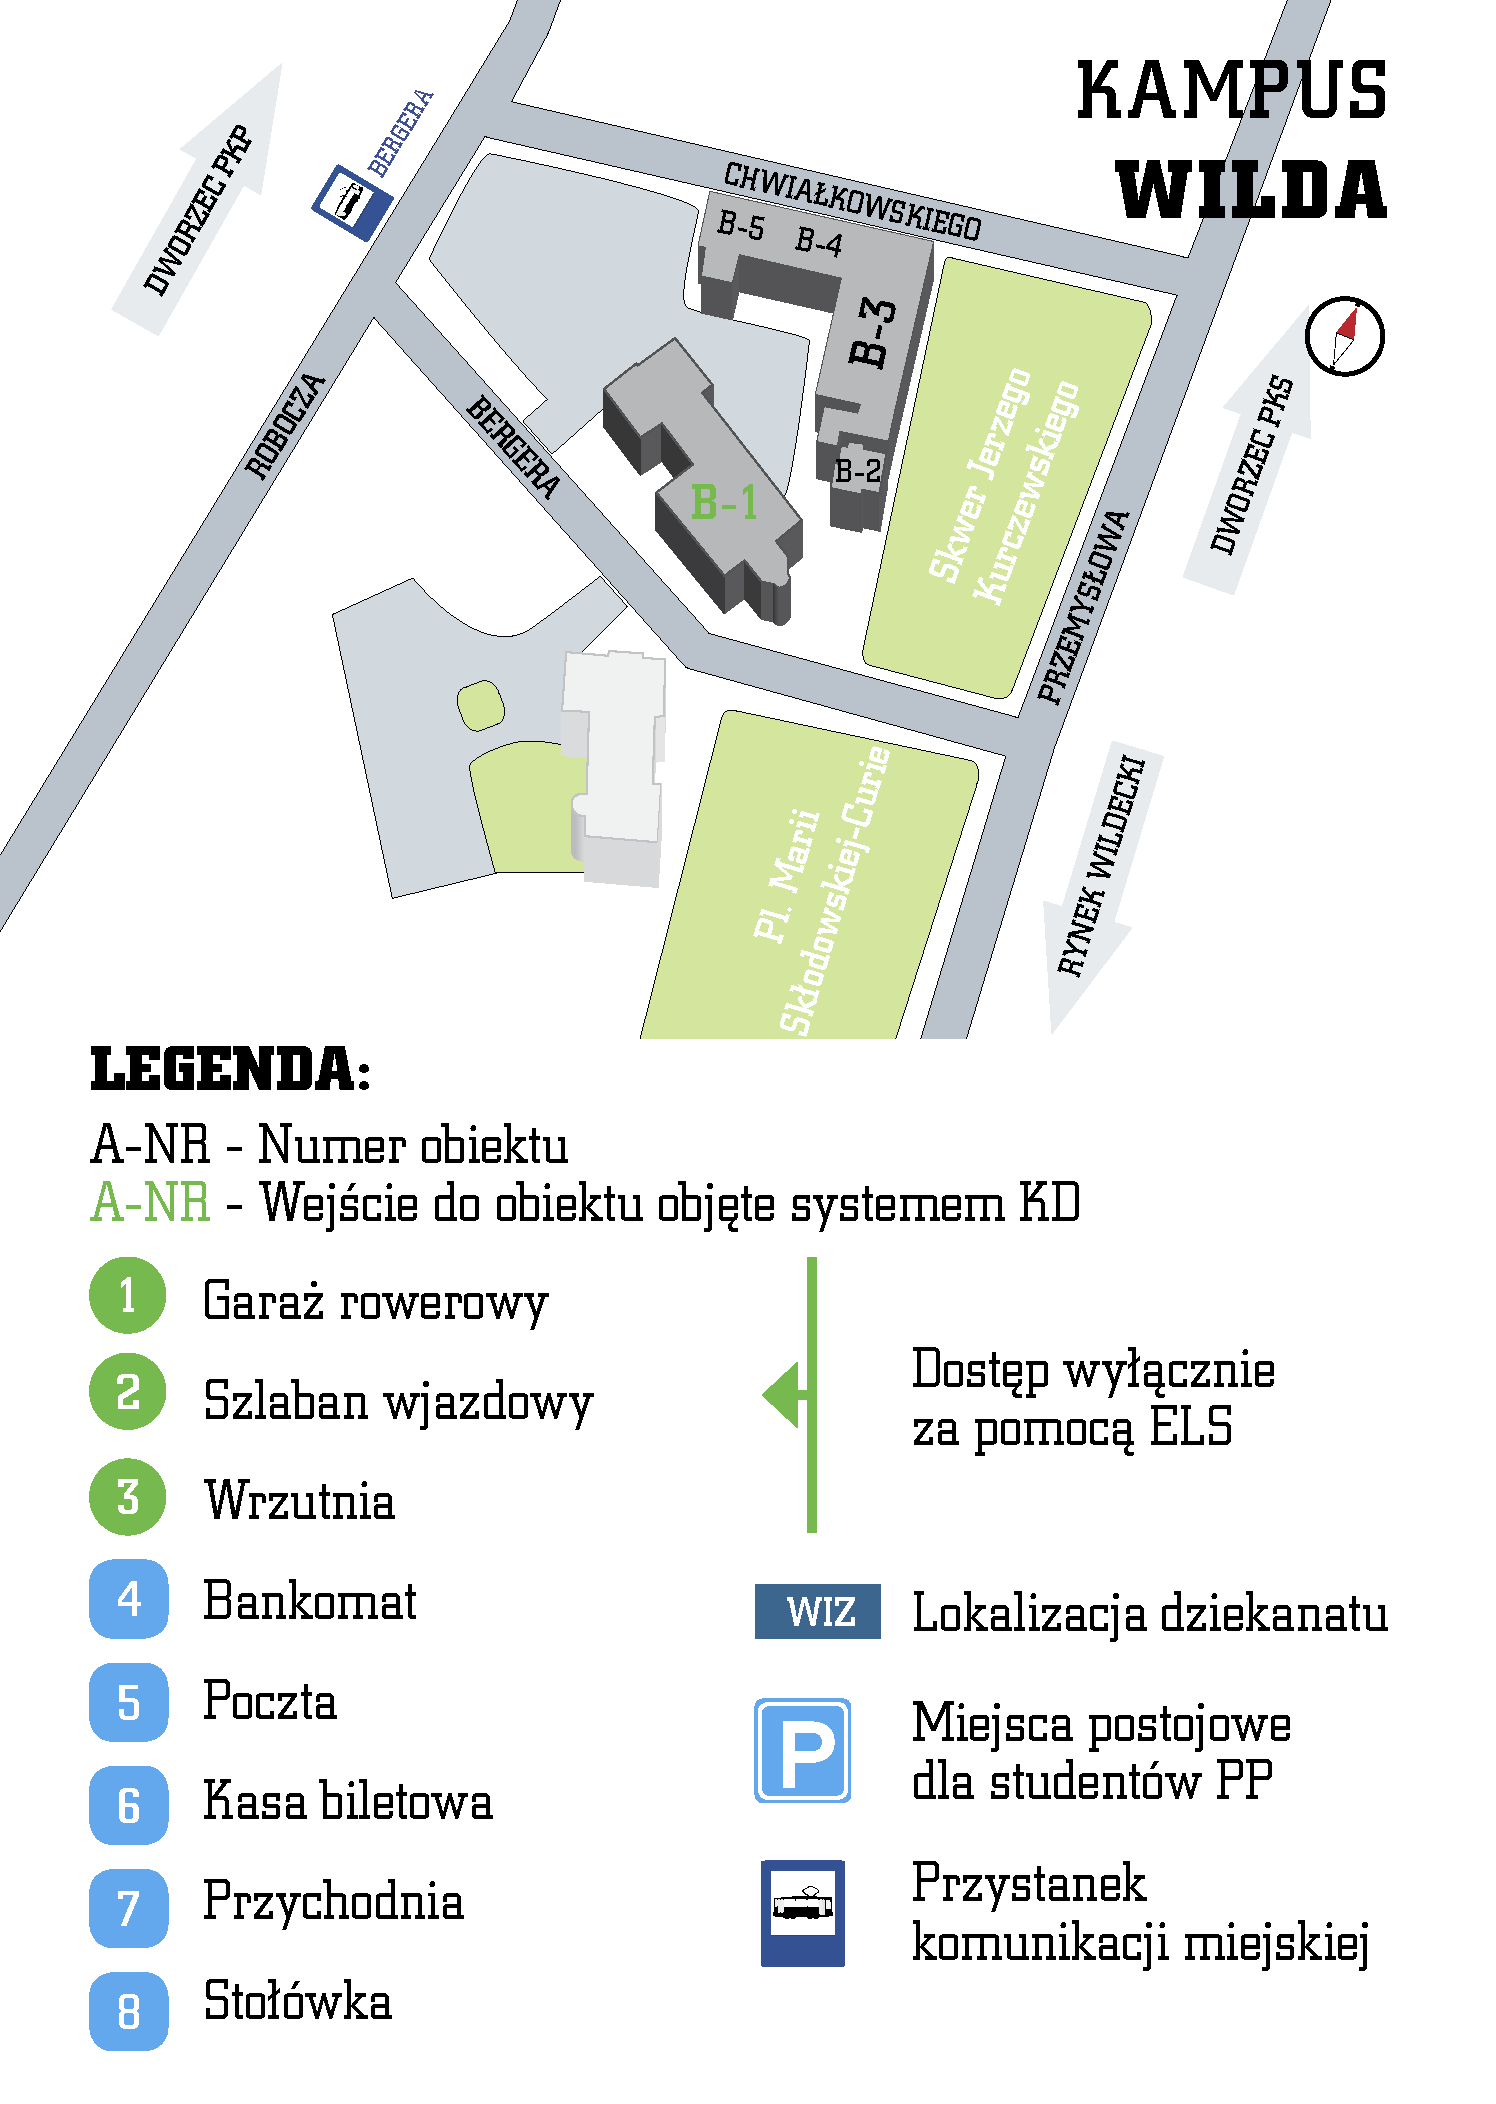 Mapa kampusu Warta